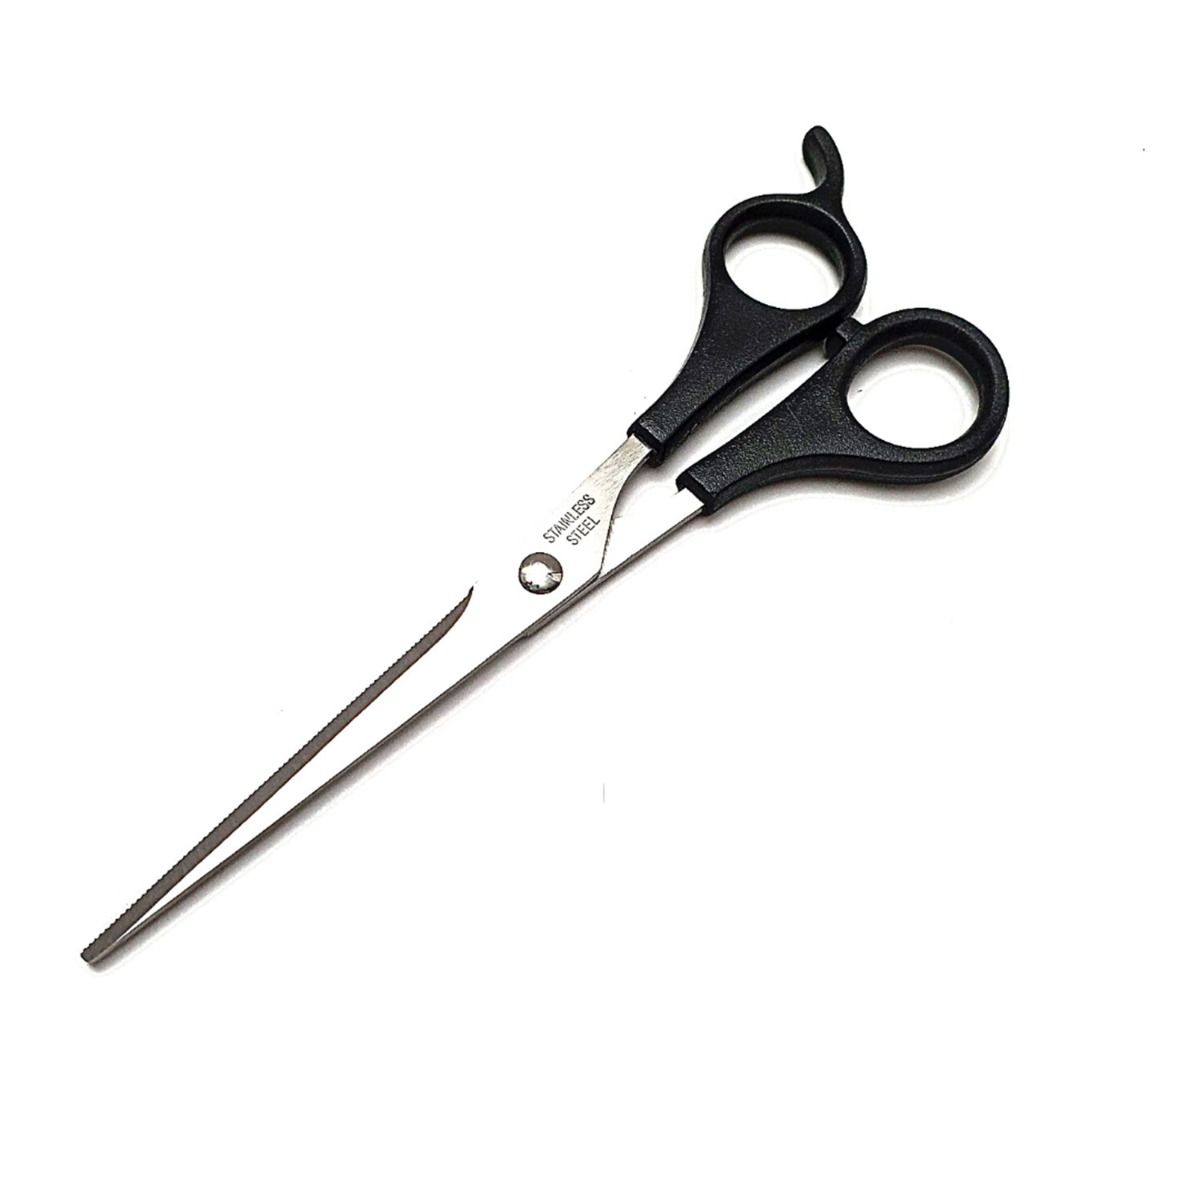 Alan Truman 1059 Plastic Handle Classic Compact Scissors, 5 Inches